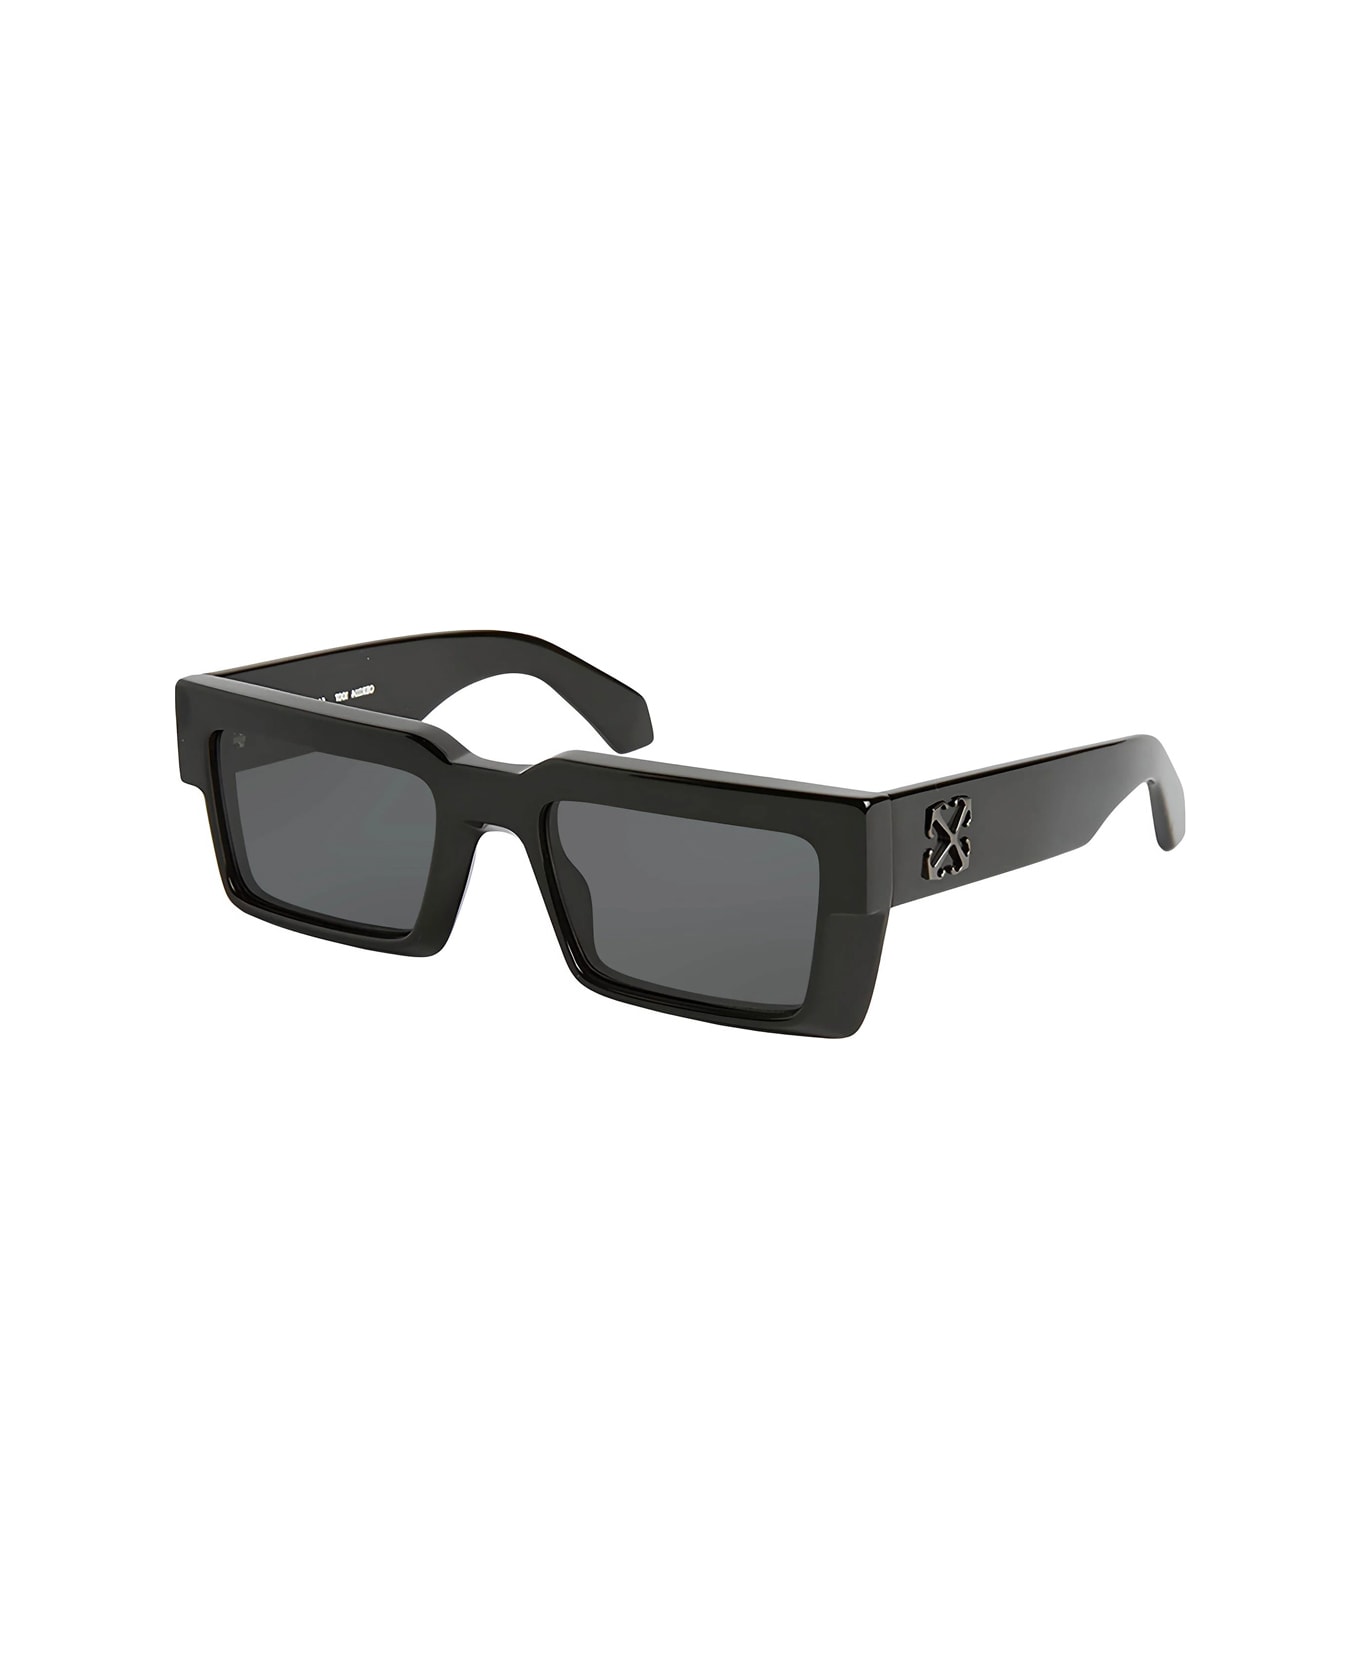 Off-White Oeri114 Moberly 1007 Black Sunglasses - Nero サングラス